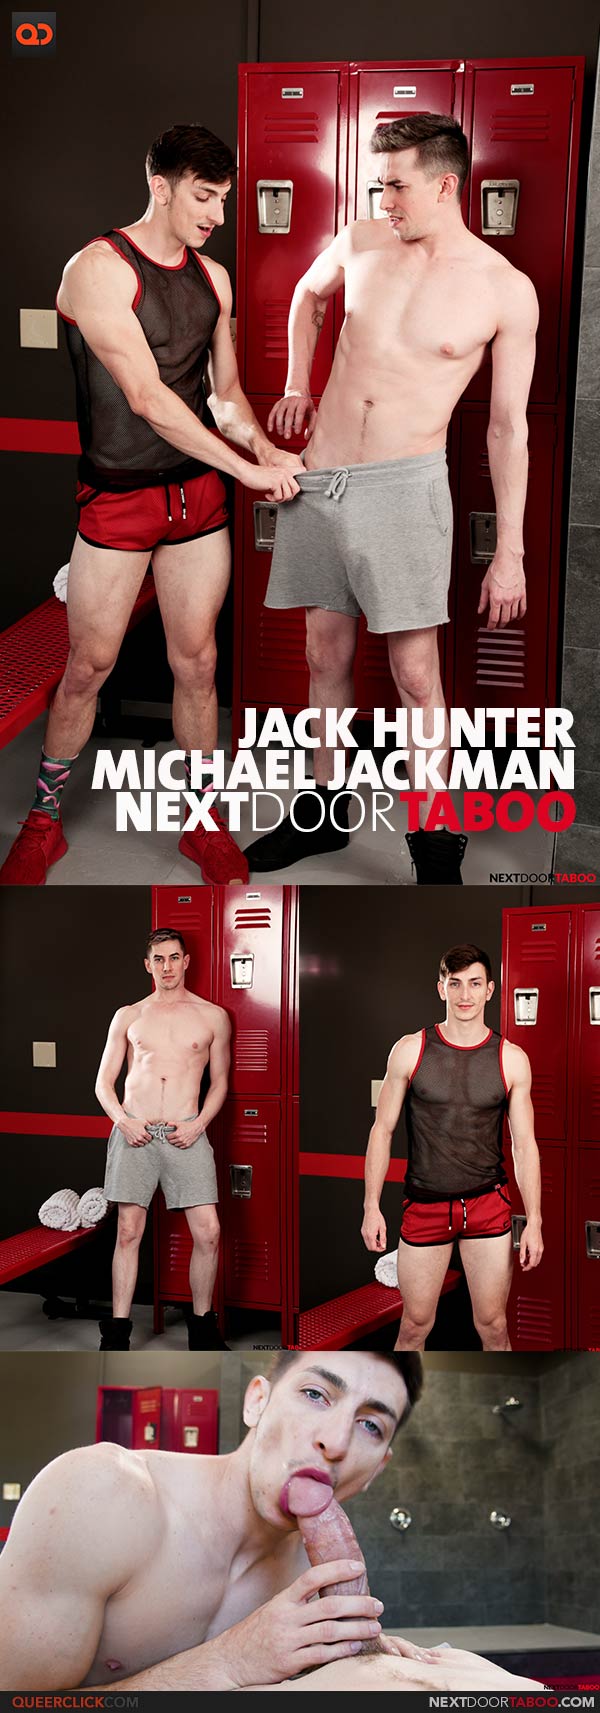 NextDoorTaboo: Jack Hunter and Michael Jackman